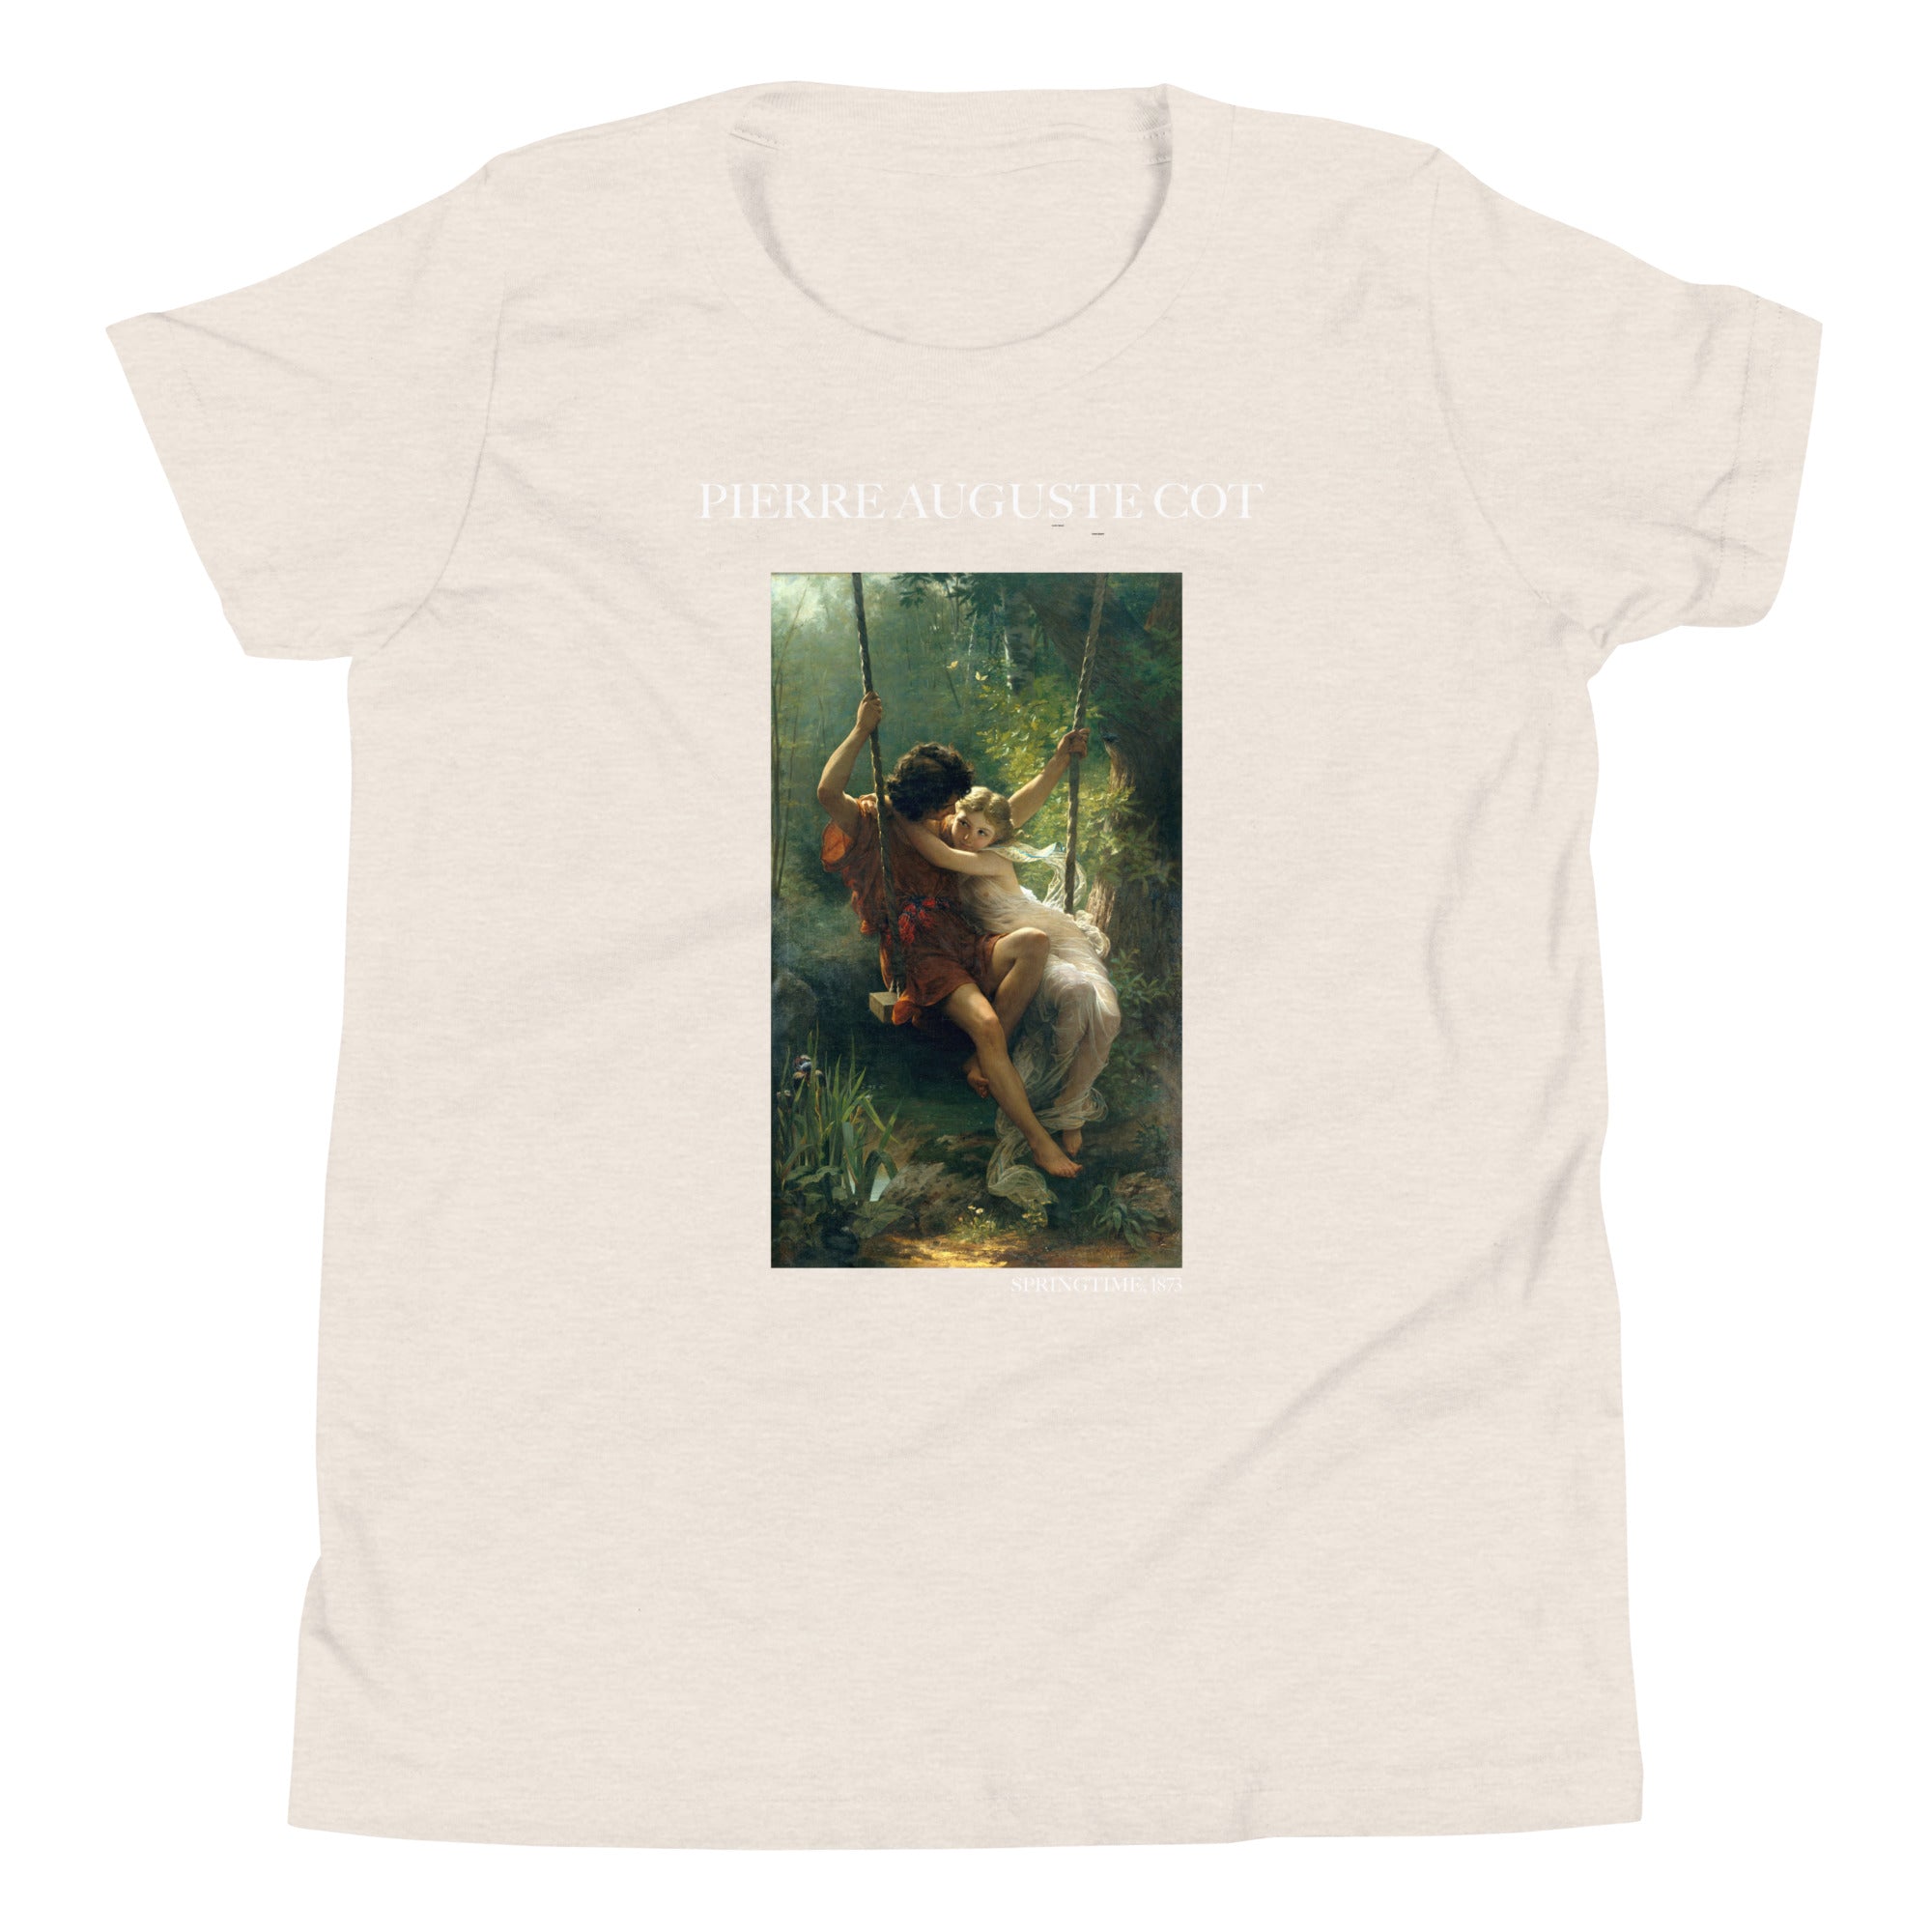 Pierre Auguste Cot 'Springtime' Famous Painting Short Sleeve T-Shirt | Premium Youth Art Tee